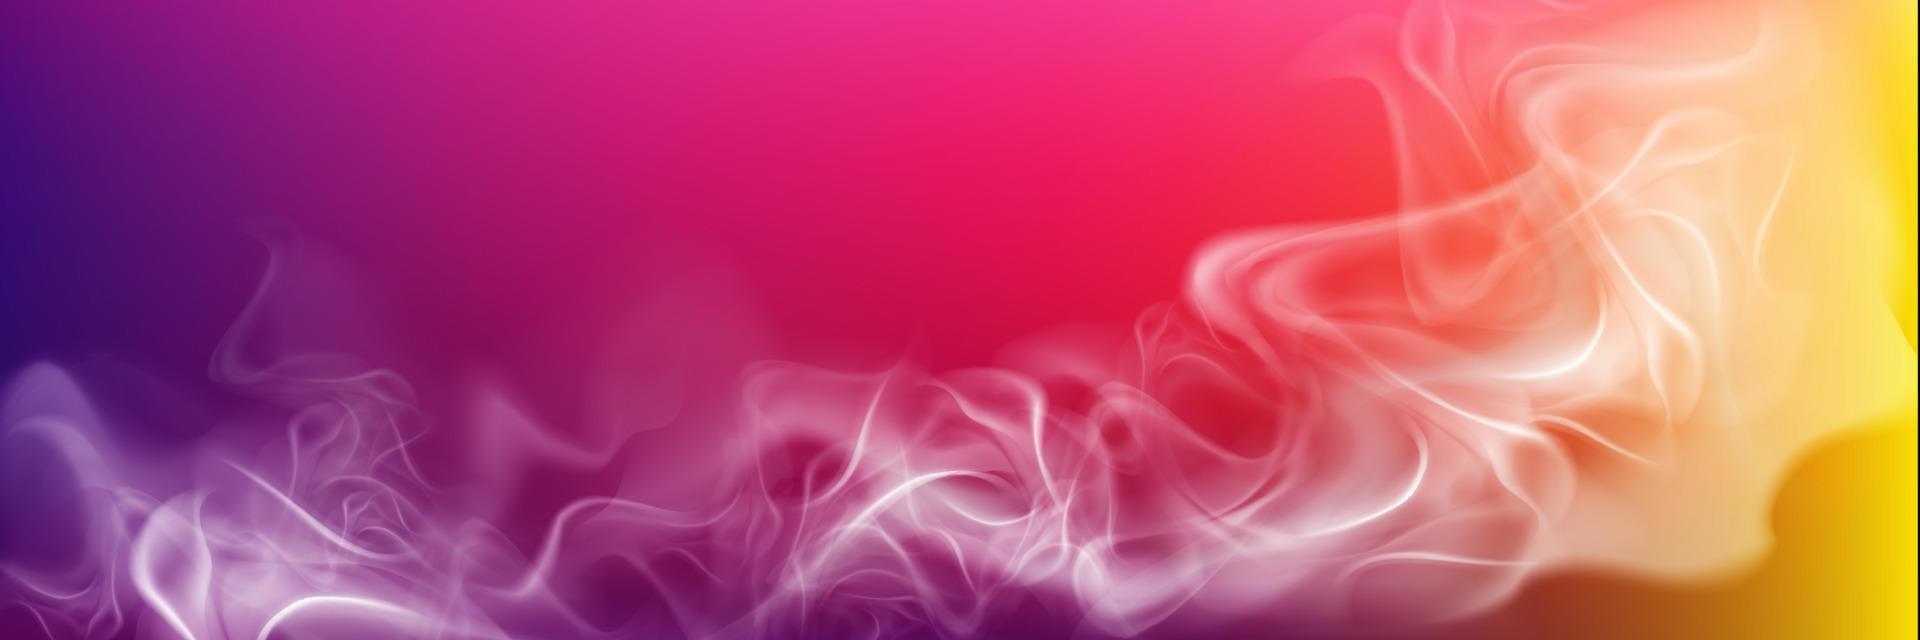 fumaça realista em fundo colorido abstrato vetor